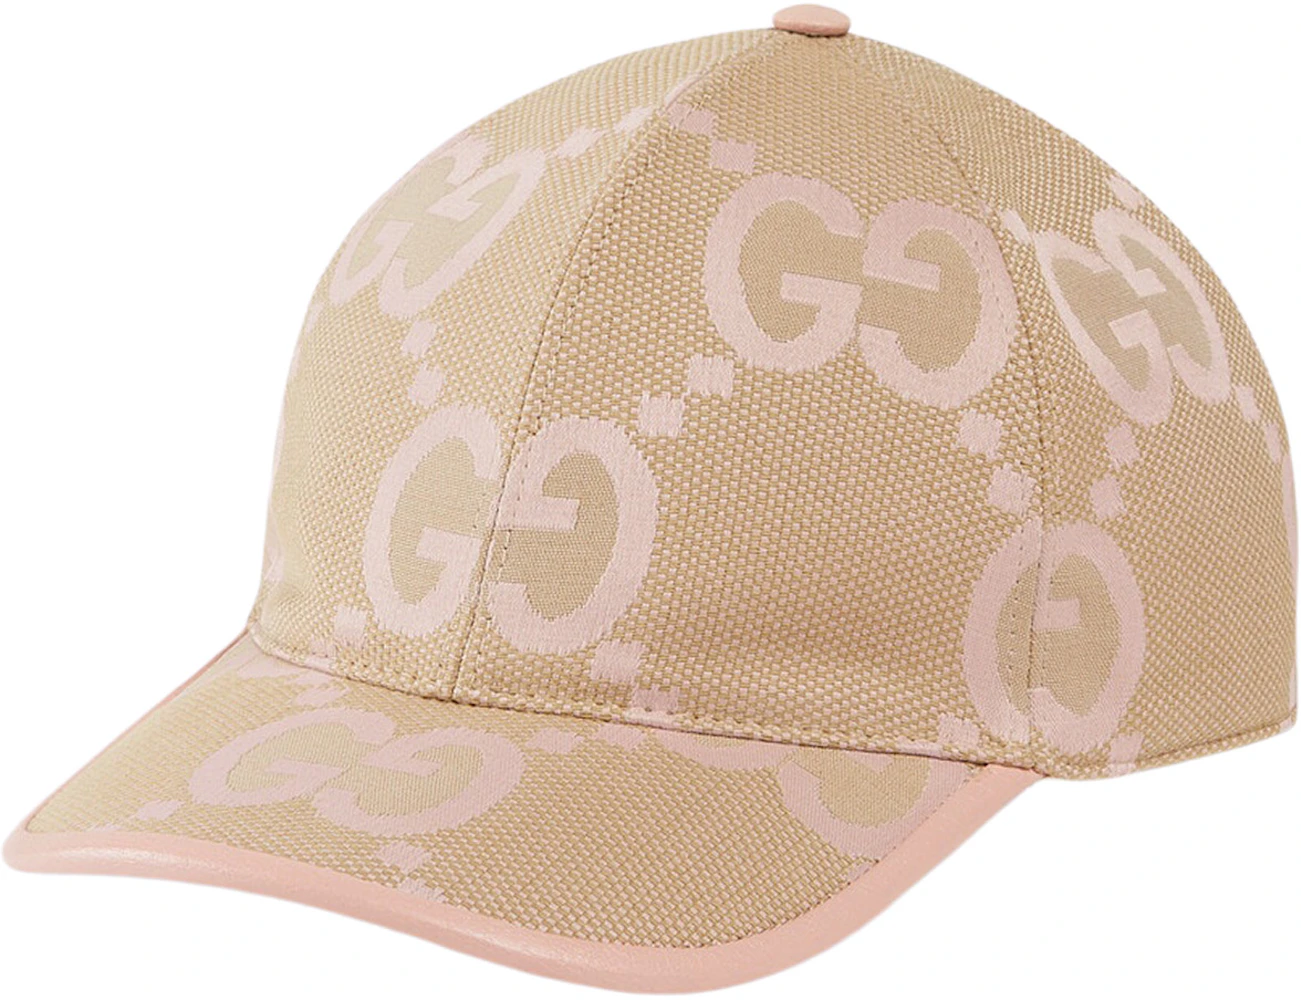 LOUIS VUITTON Hat Cap Pink Monogram Canvas Summer Hat Size Medium